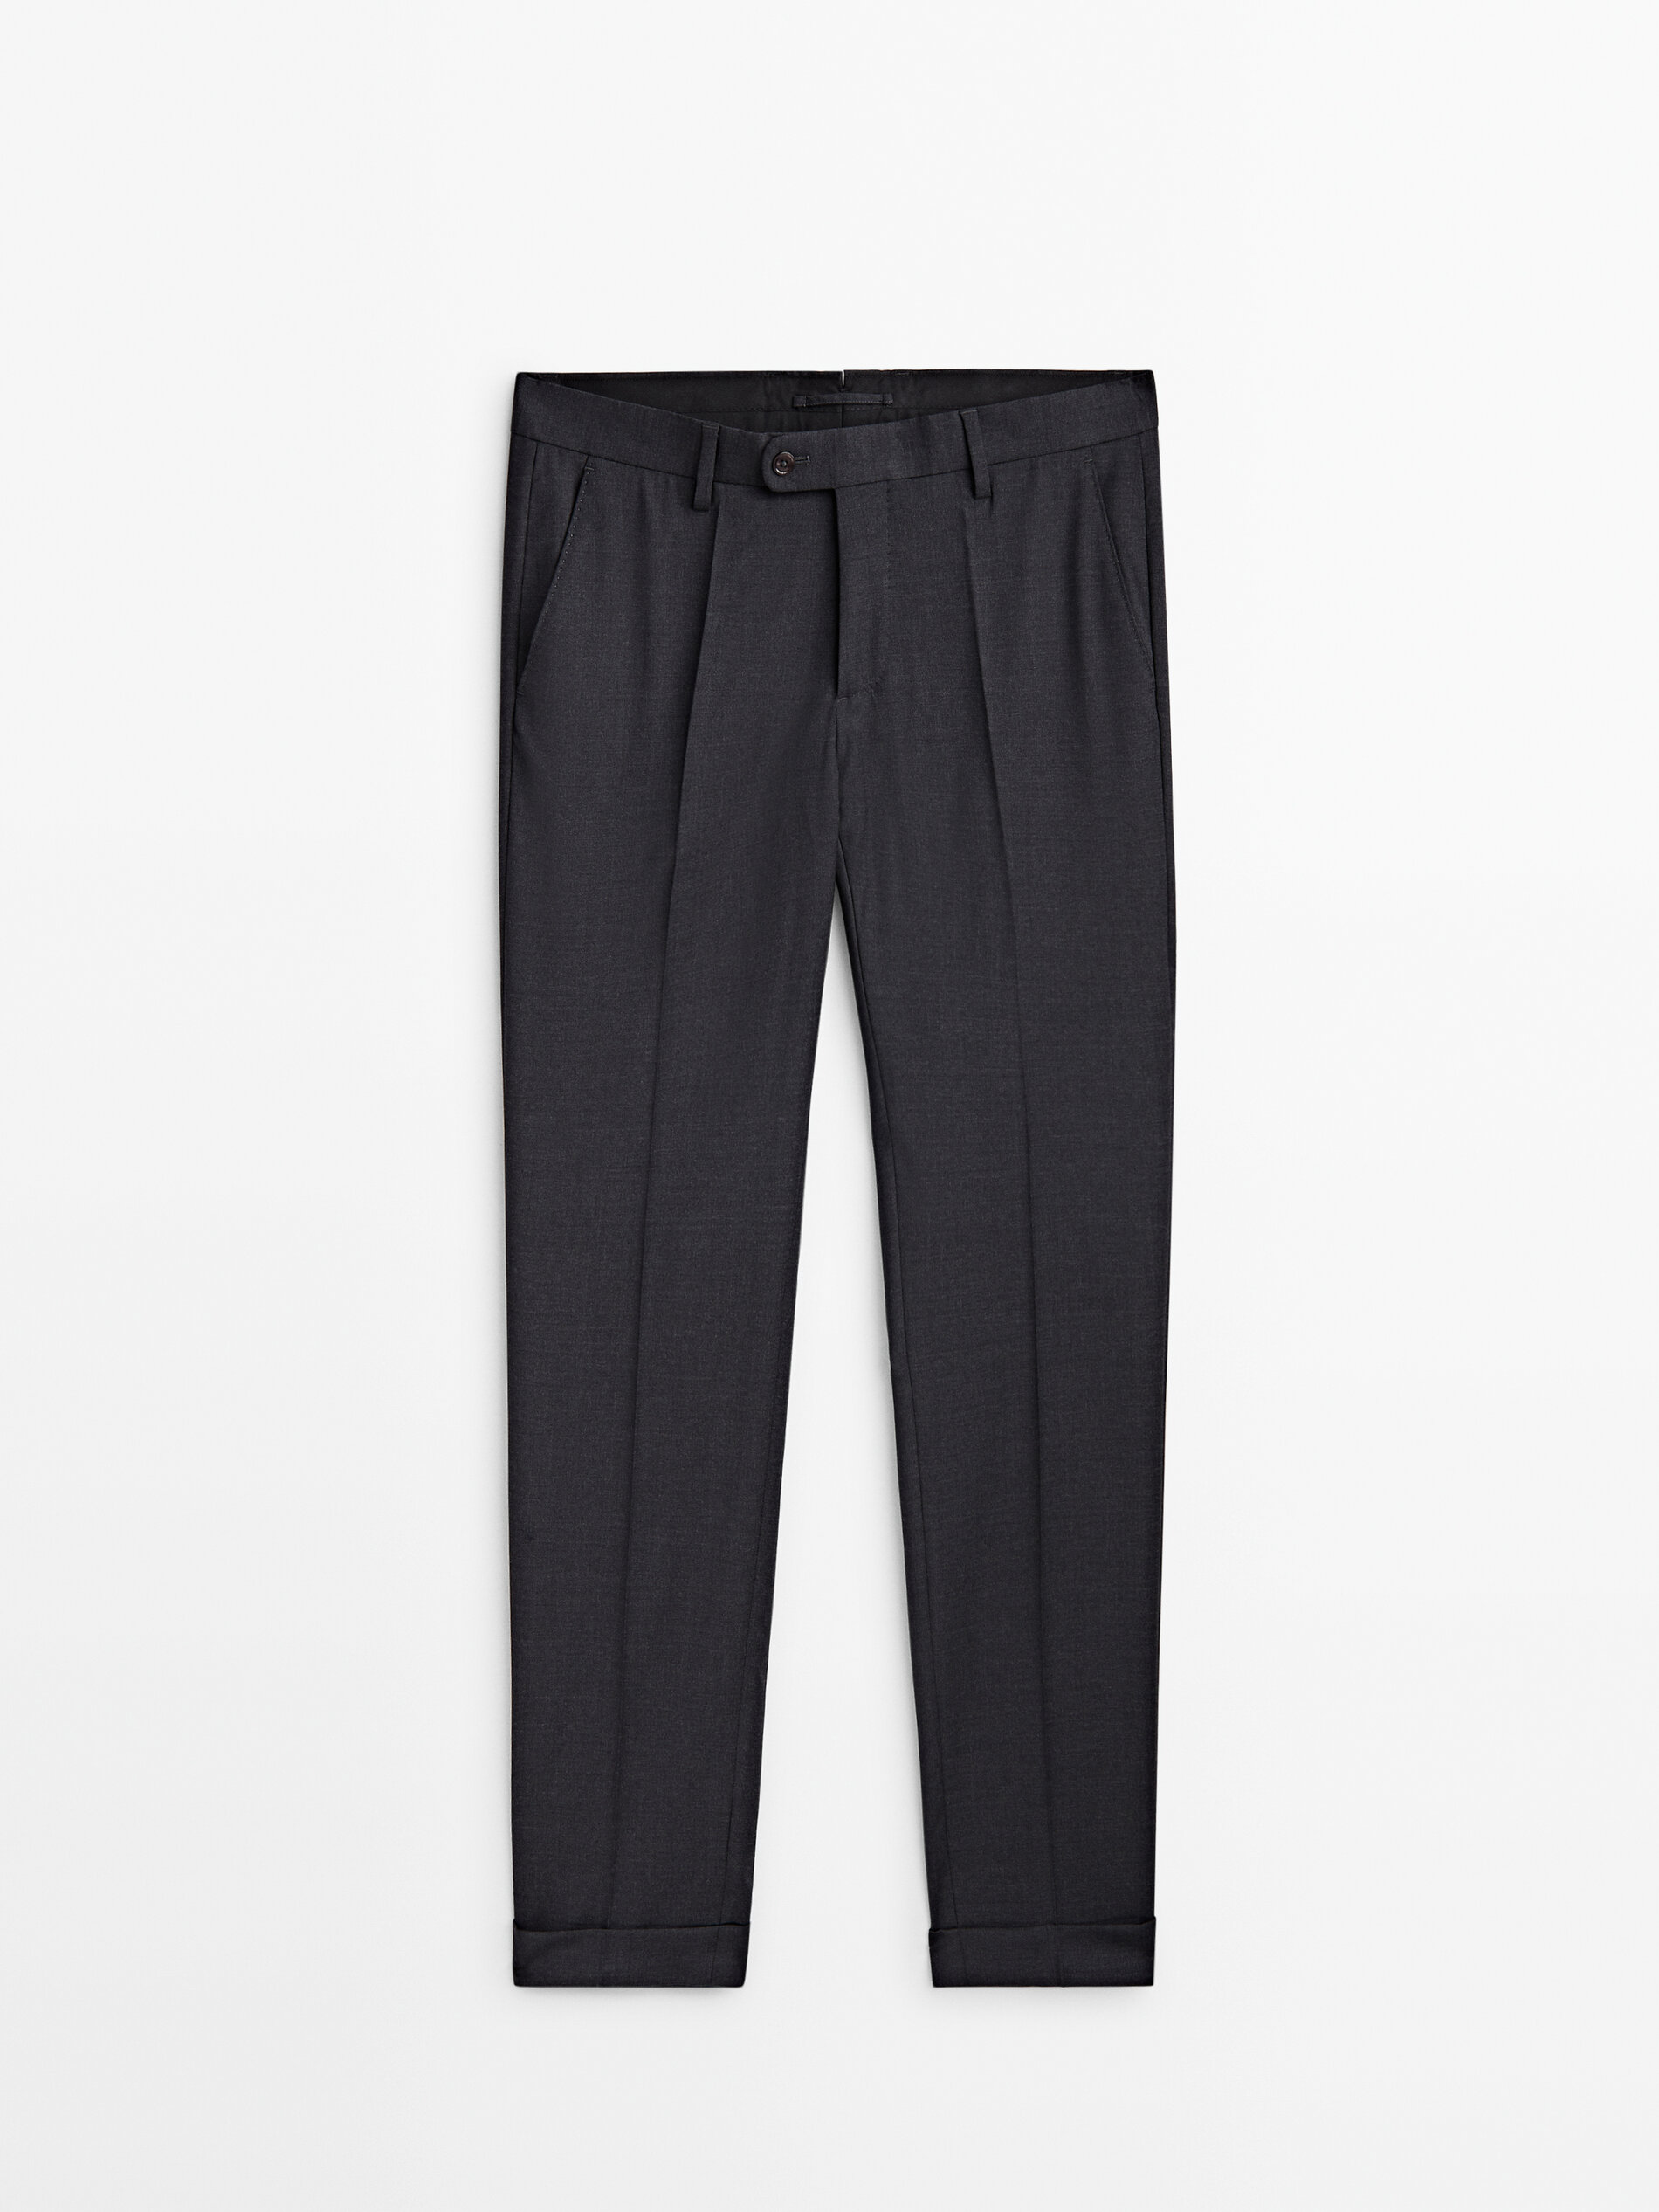 Men's Trousers | Flannel, Chino, Smart | Wool, Cotton, Linen – Gentlemans  Journal Shop